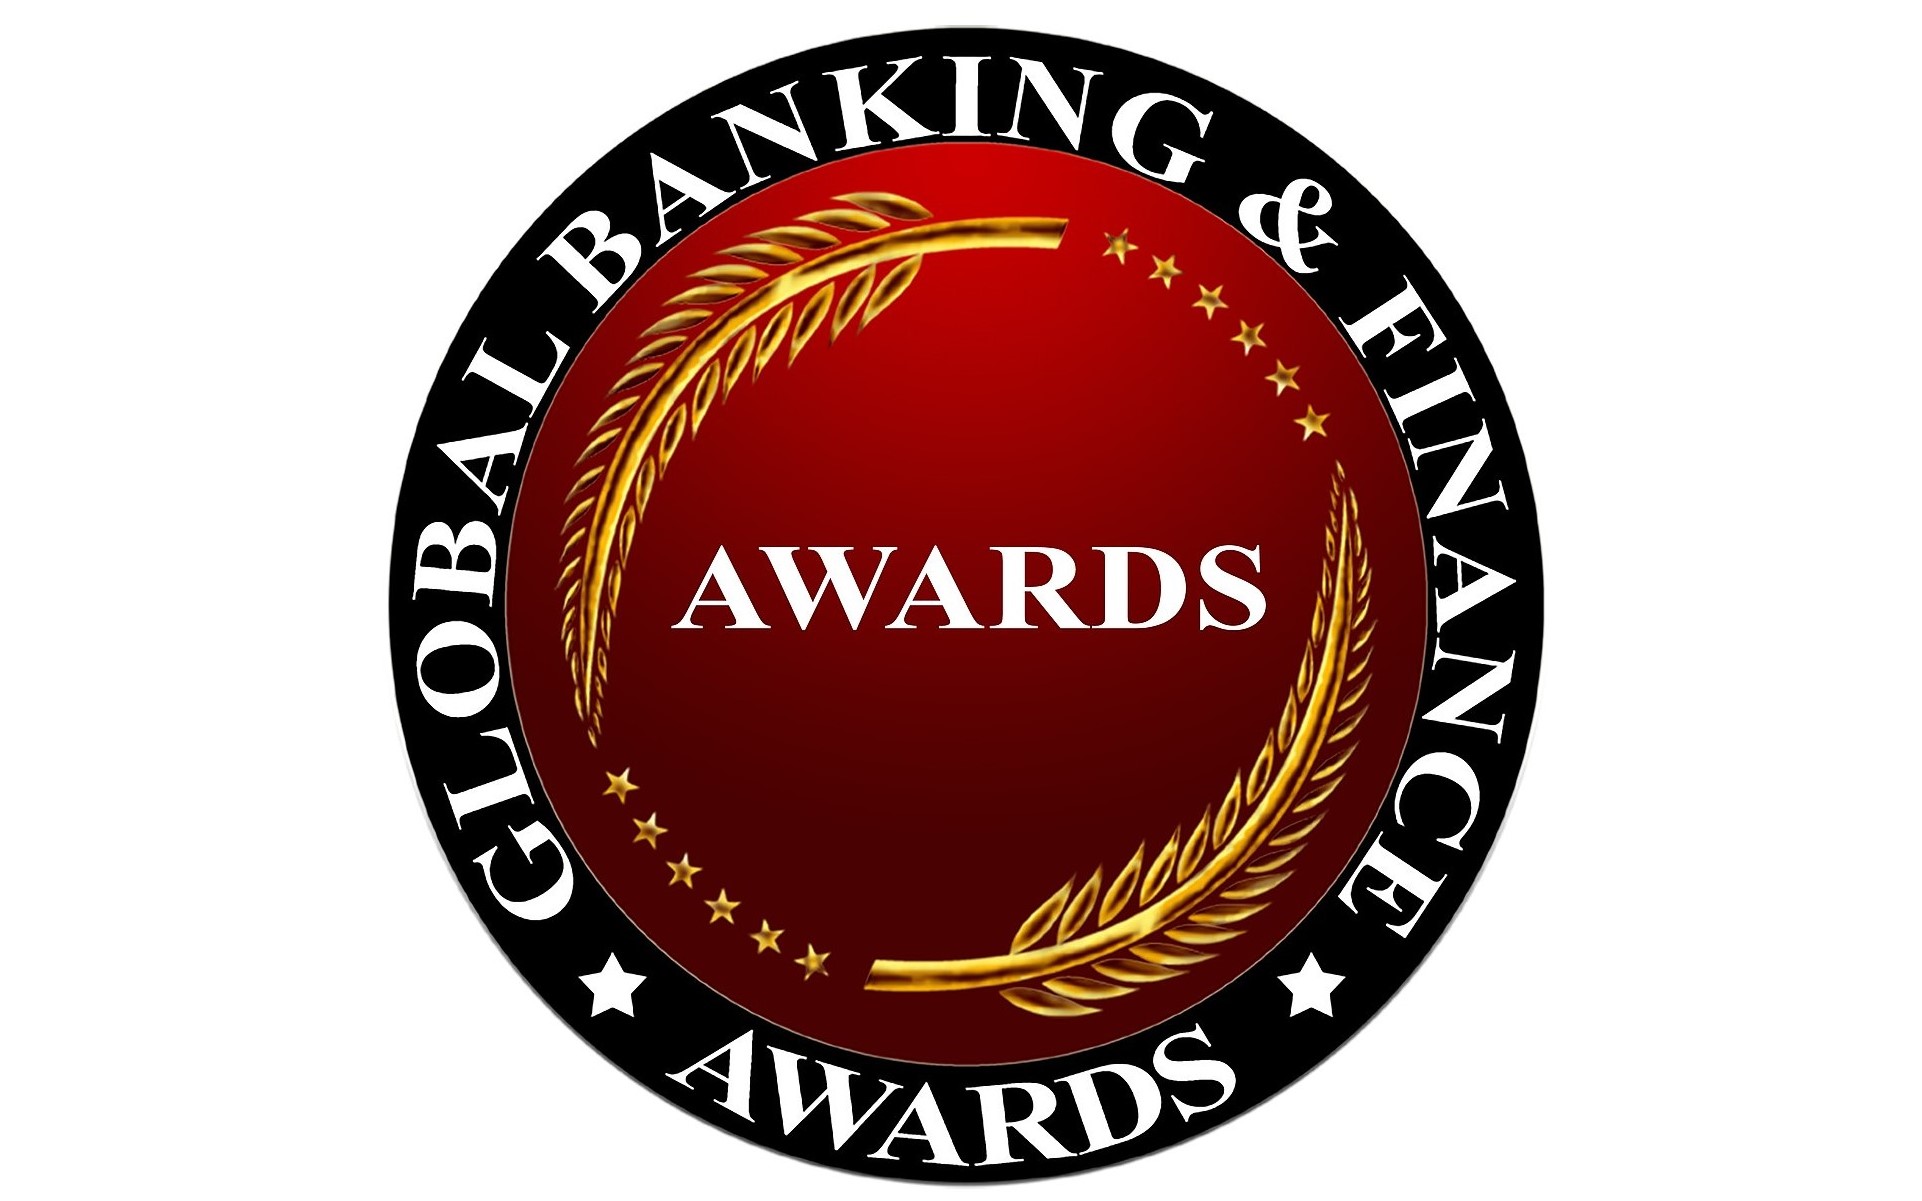 Slovak online media portal «Finančné noviny»: The International Bank for Economic Co-operation has received two awards from the British media portal Global Banking & Finance Review